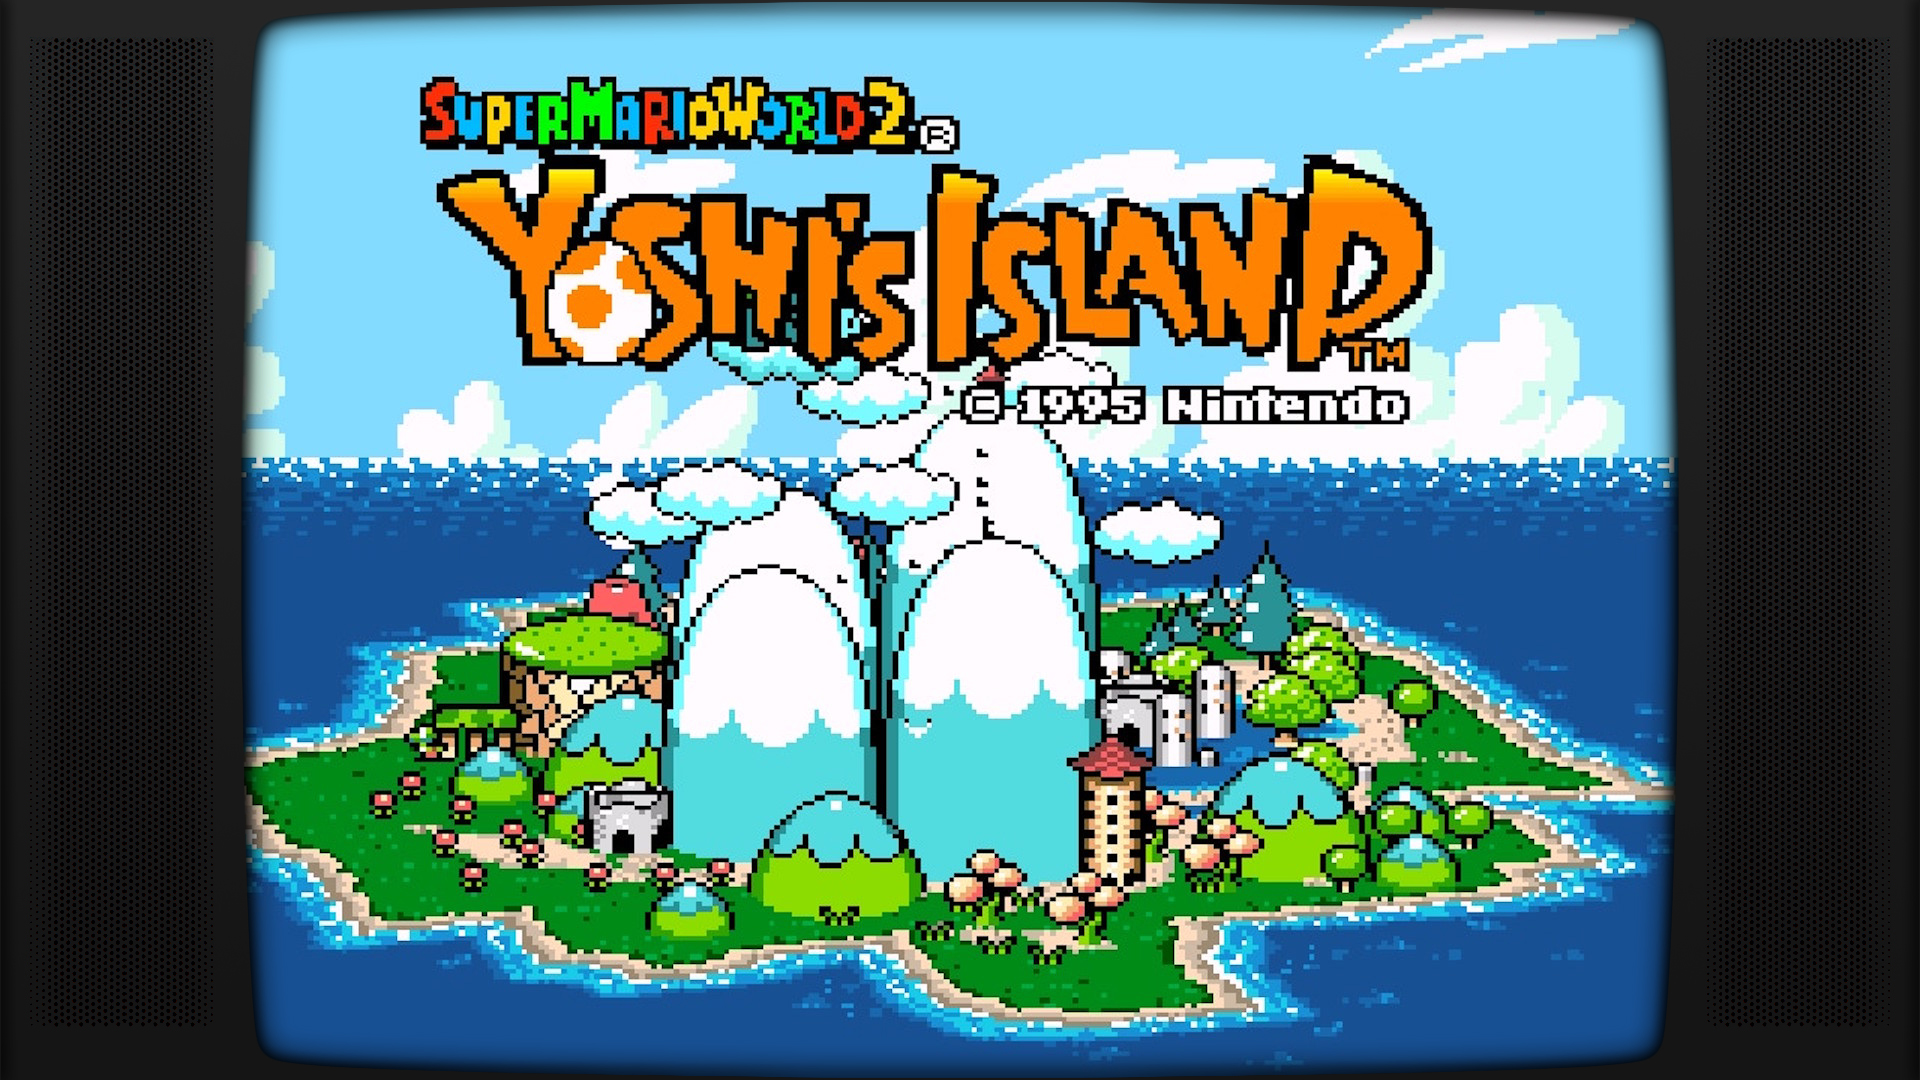 Yoshi's Island giflogo. Title Screen Yoshi Island. Yoshi's Island Castle Doors Falling. Super Mario World 2 - Yoshi's Island обои. Super mario world yoshi's island